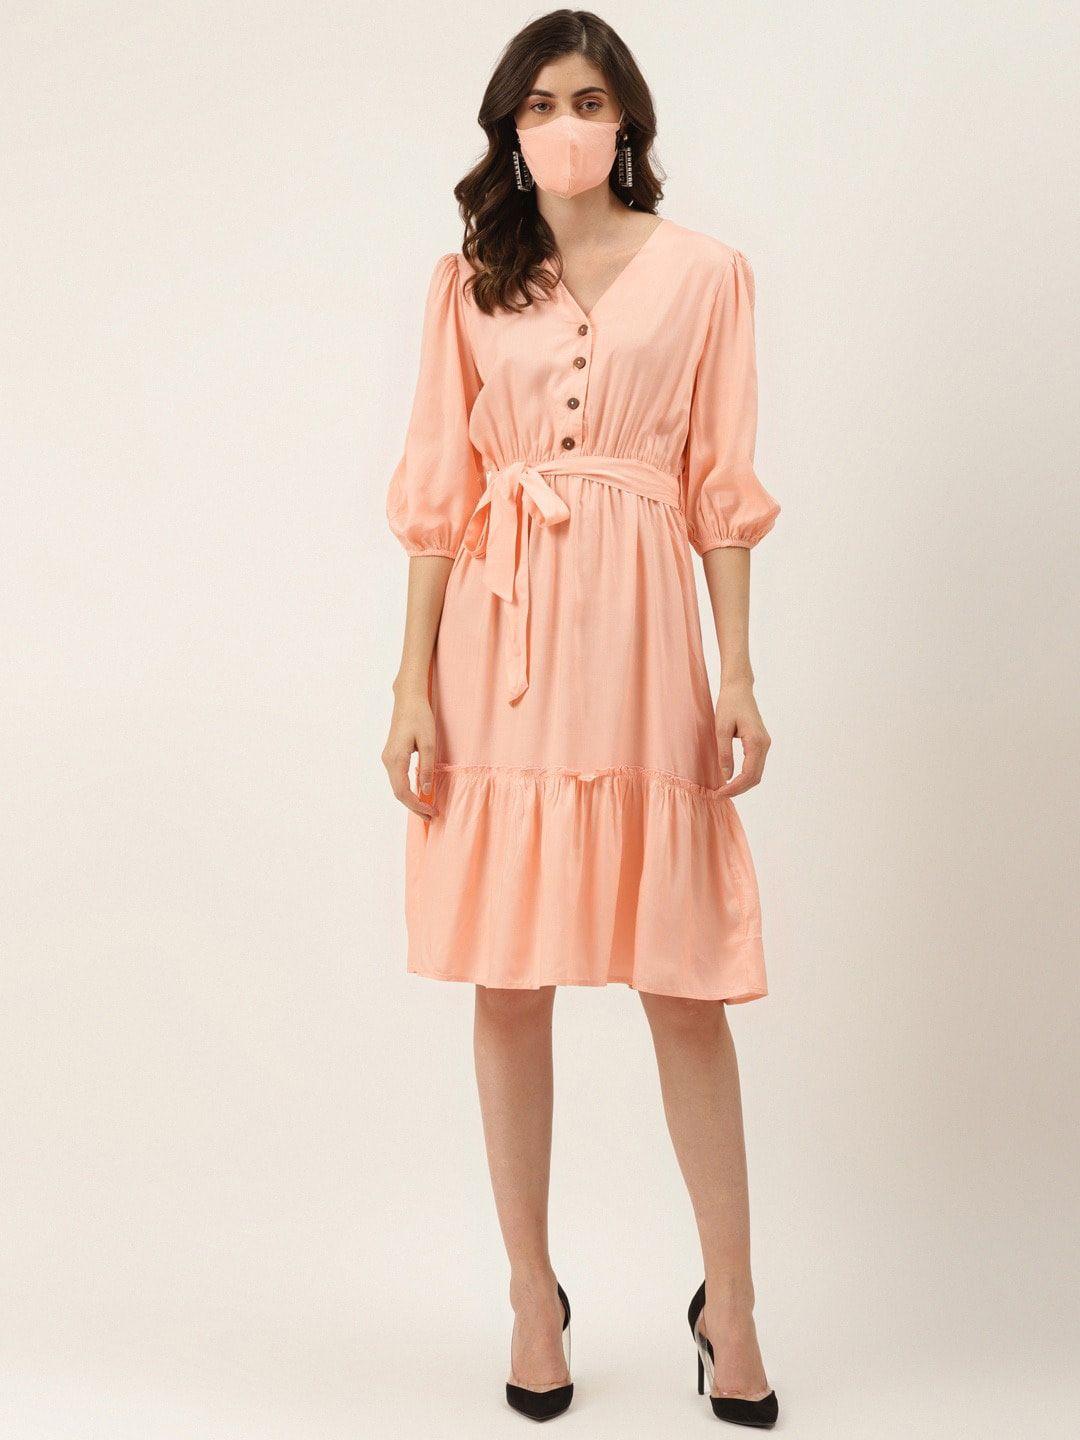 diva walk exclusive peach-coloured dress